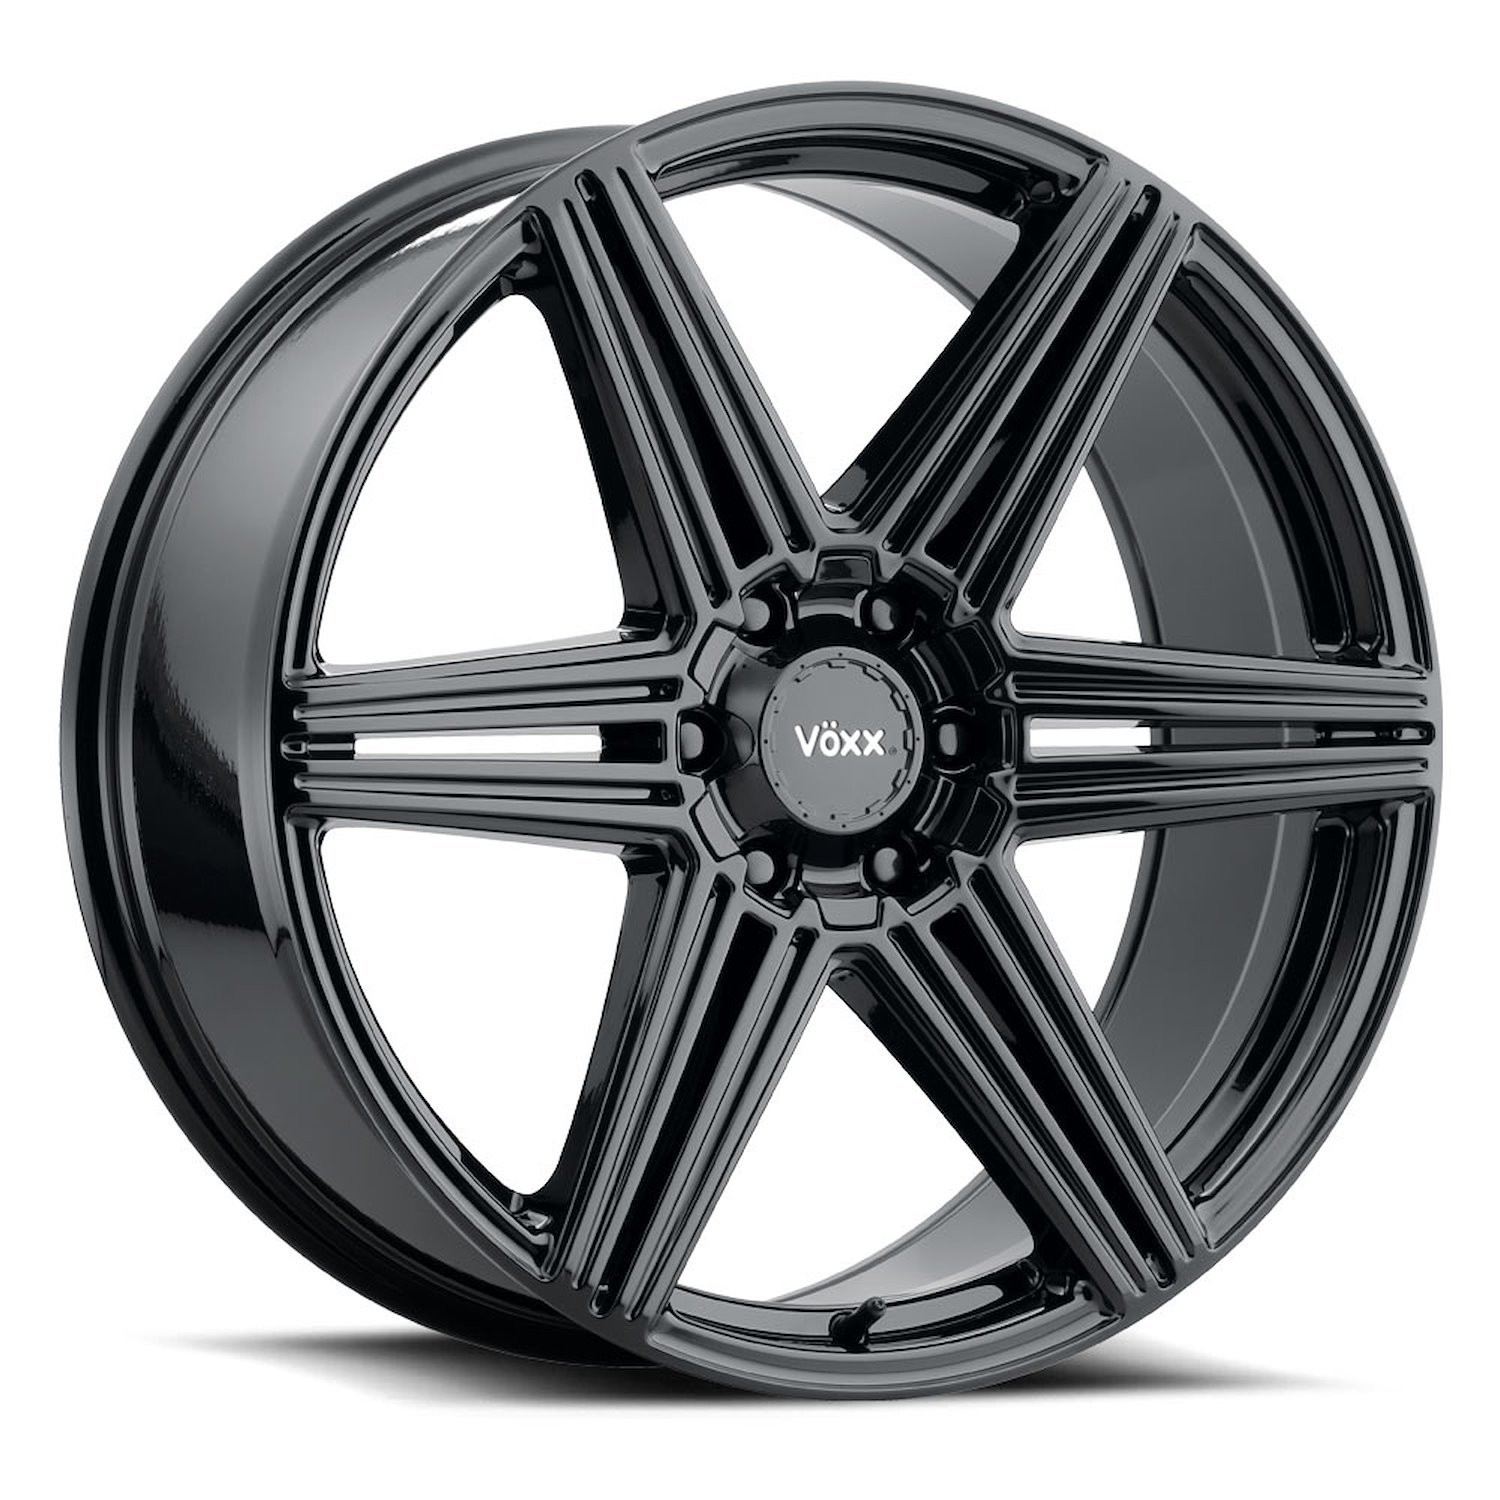 SOT 285-6004-39 GB Sotto Wheel [Size: 20" x 8.50"] Finish: Gloss Black